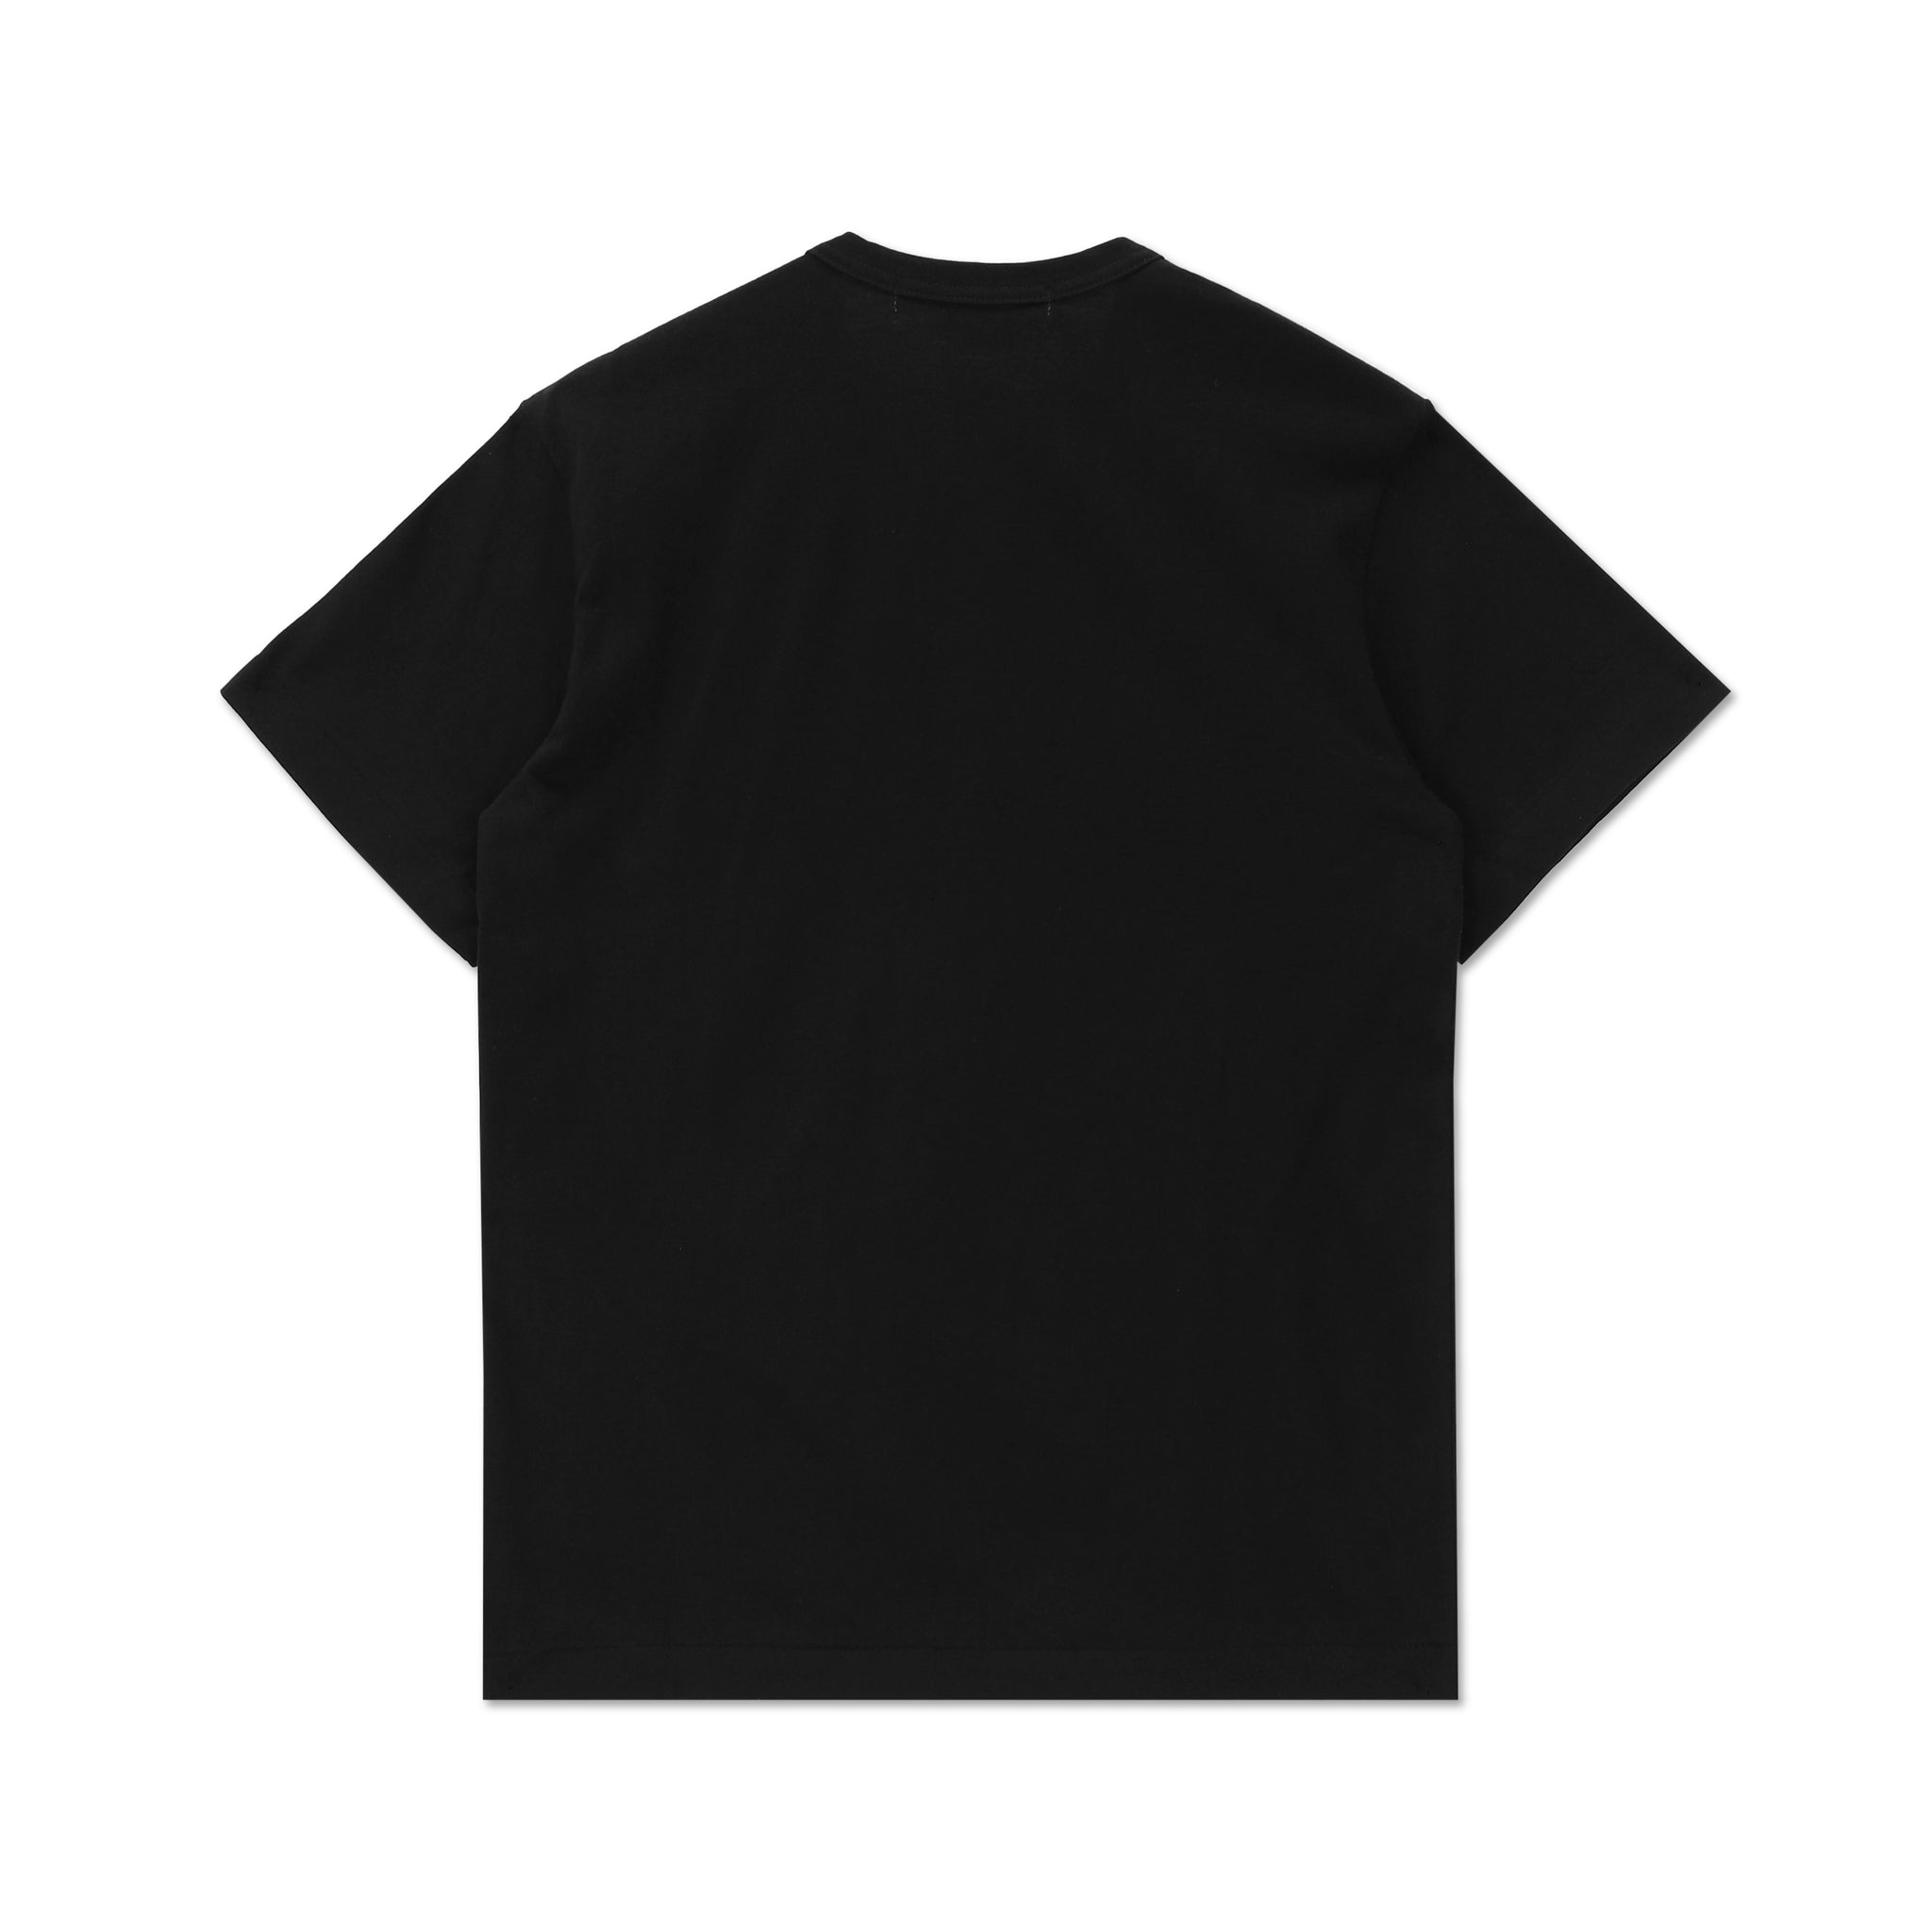 CC TB Cotton S/S T-Shirt Black